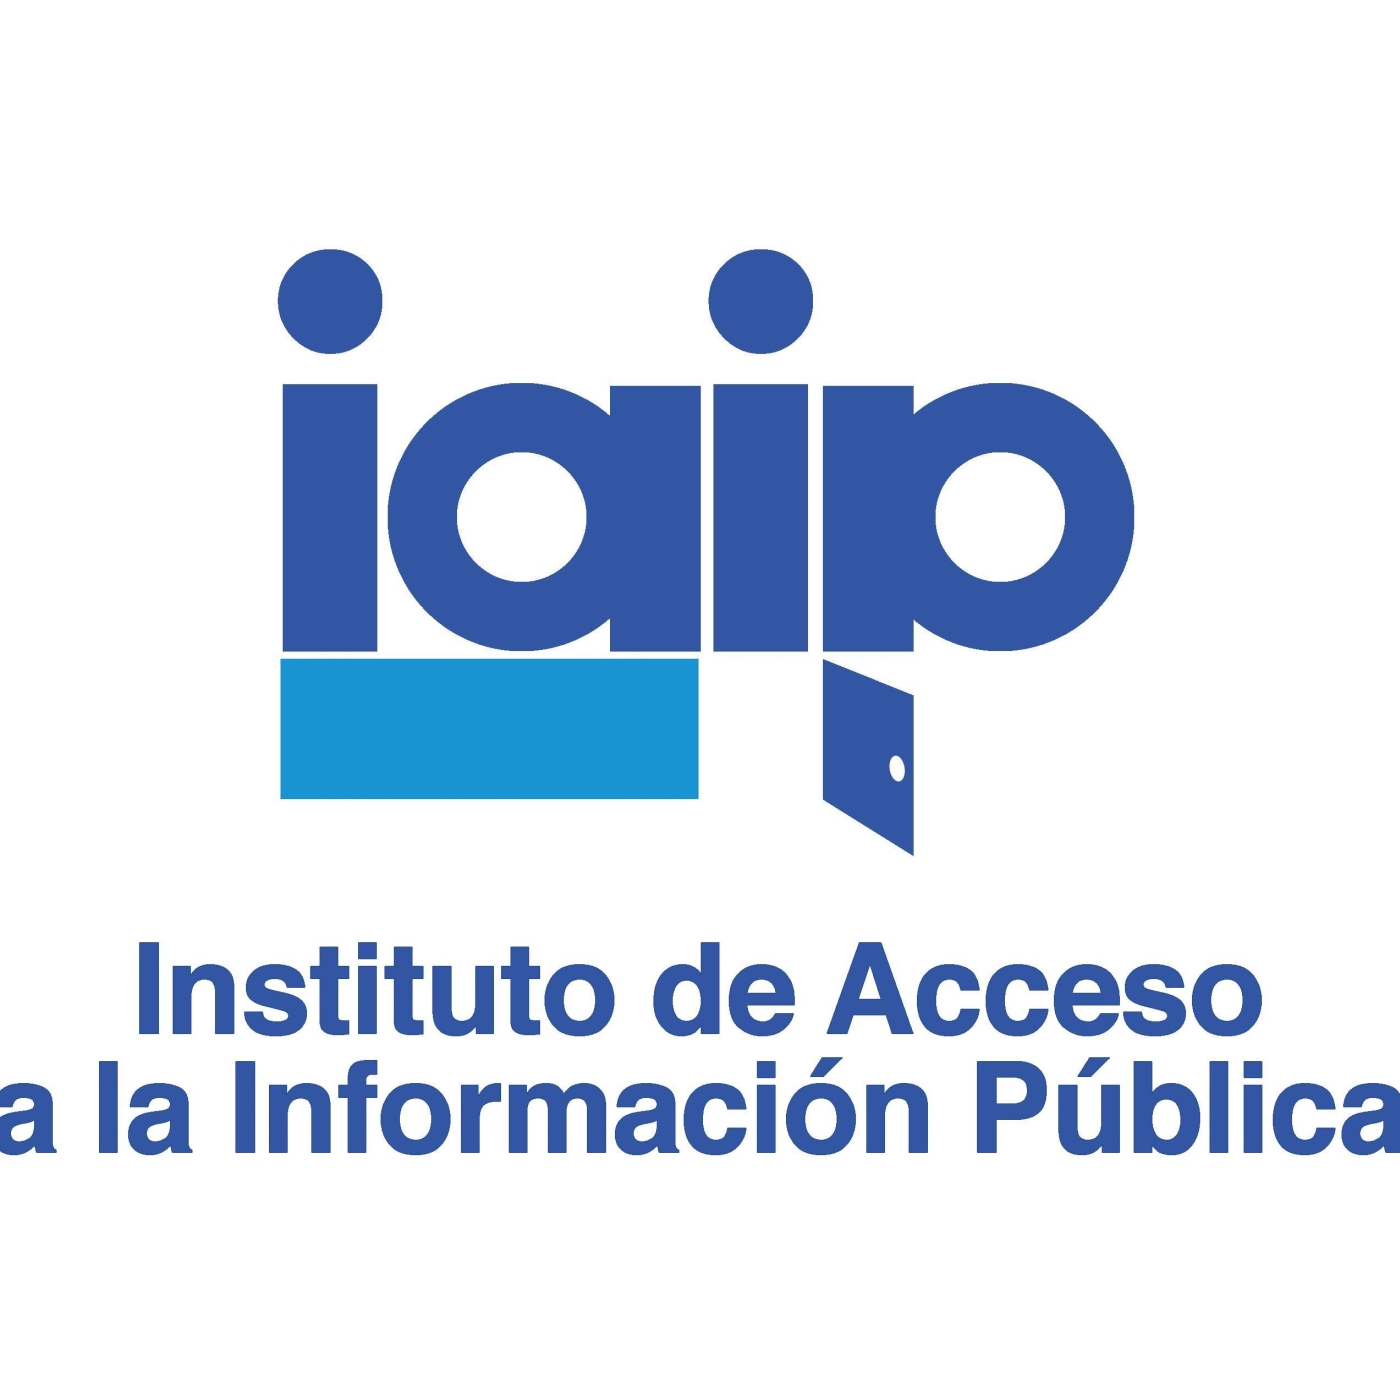 IAIP Logo | U.S-El Salvador Sister Cities